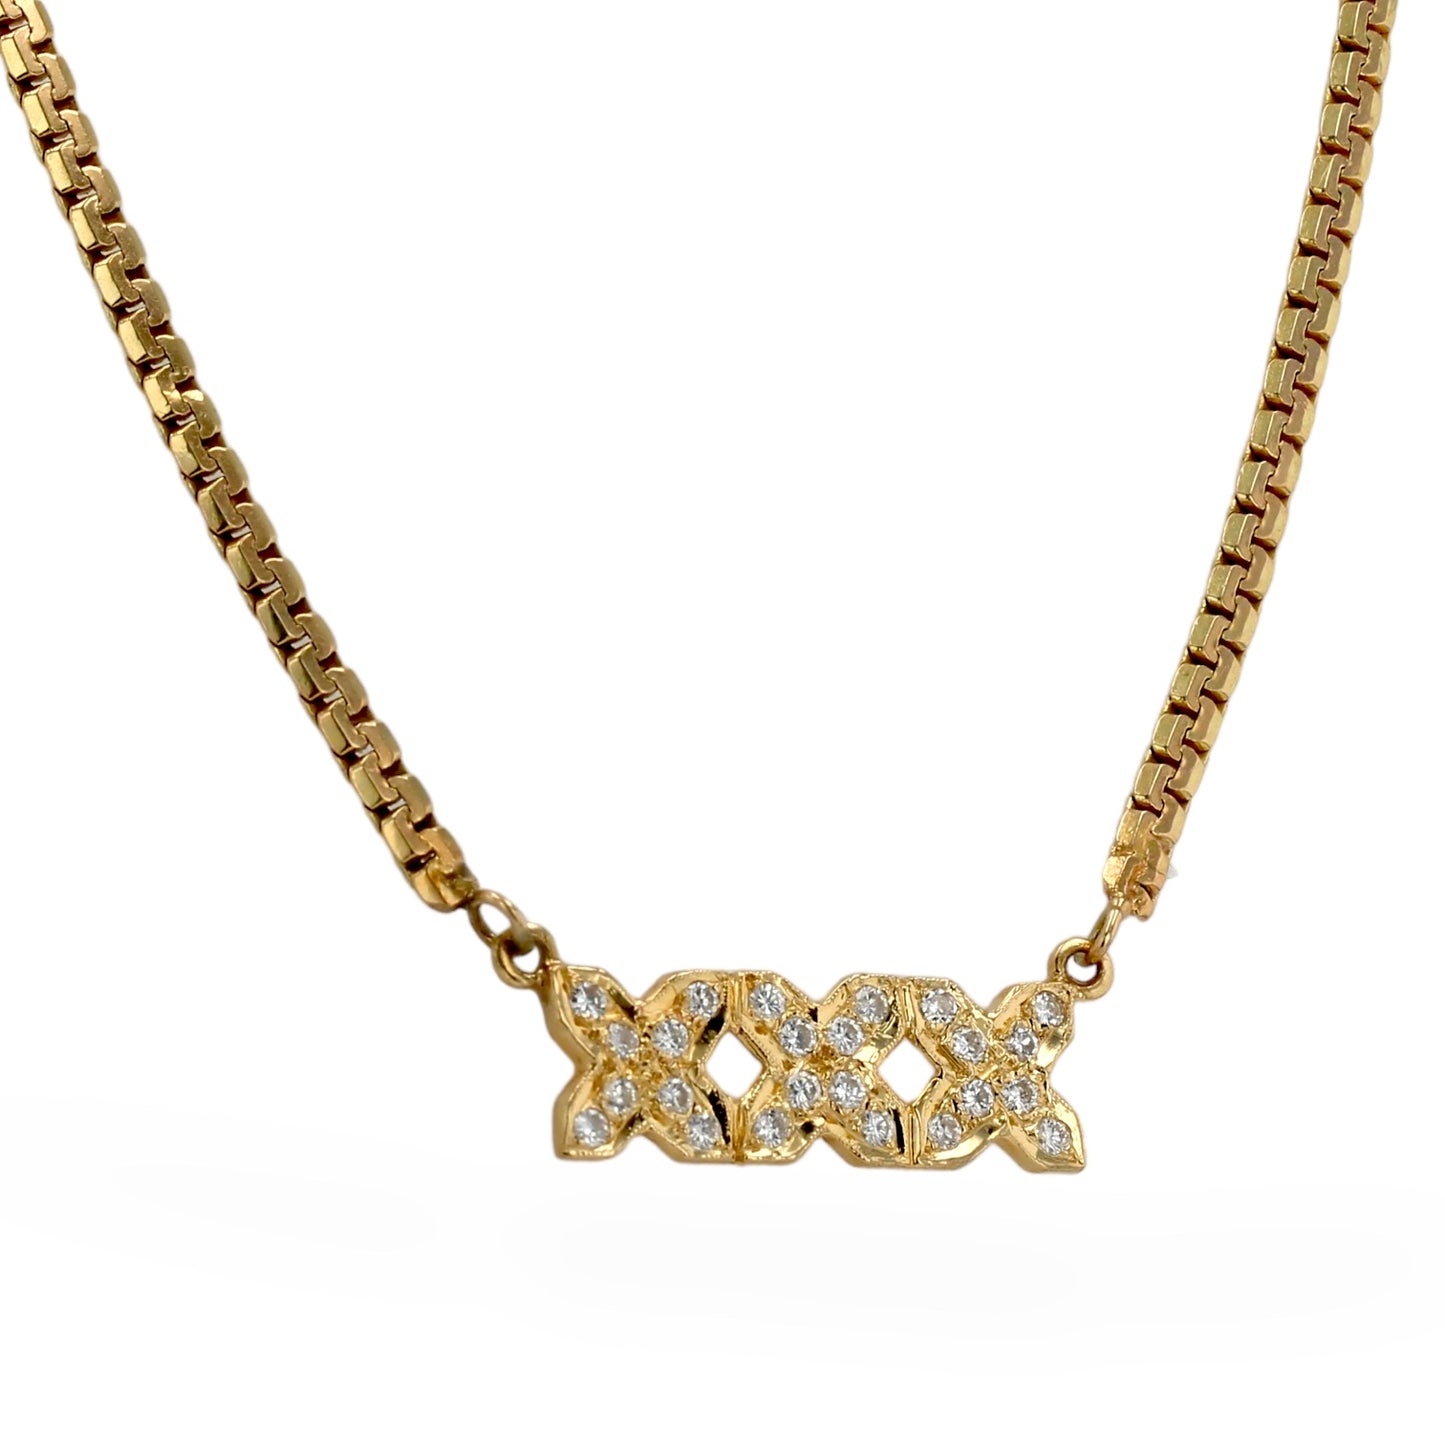 14k solid yellow gold xoxo diamond necklace.